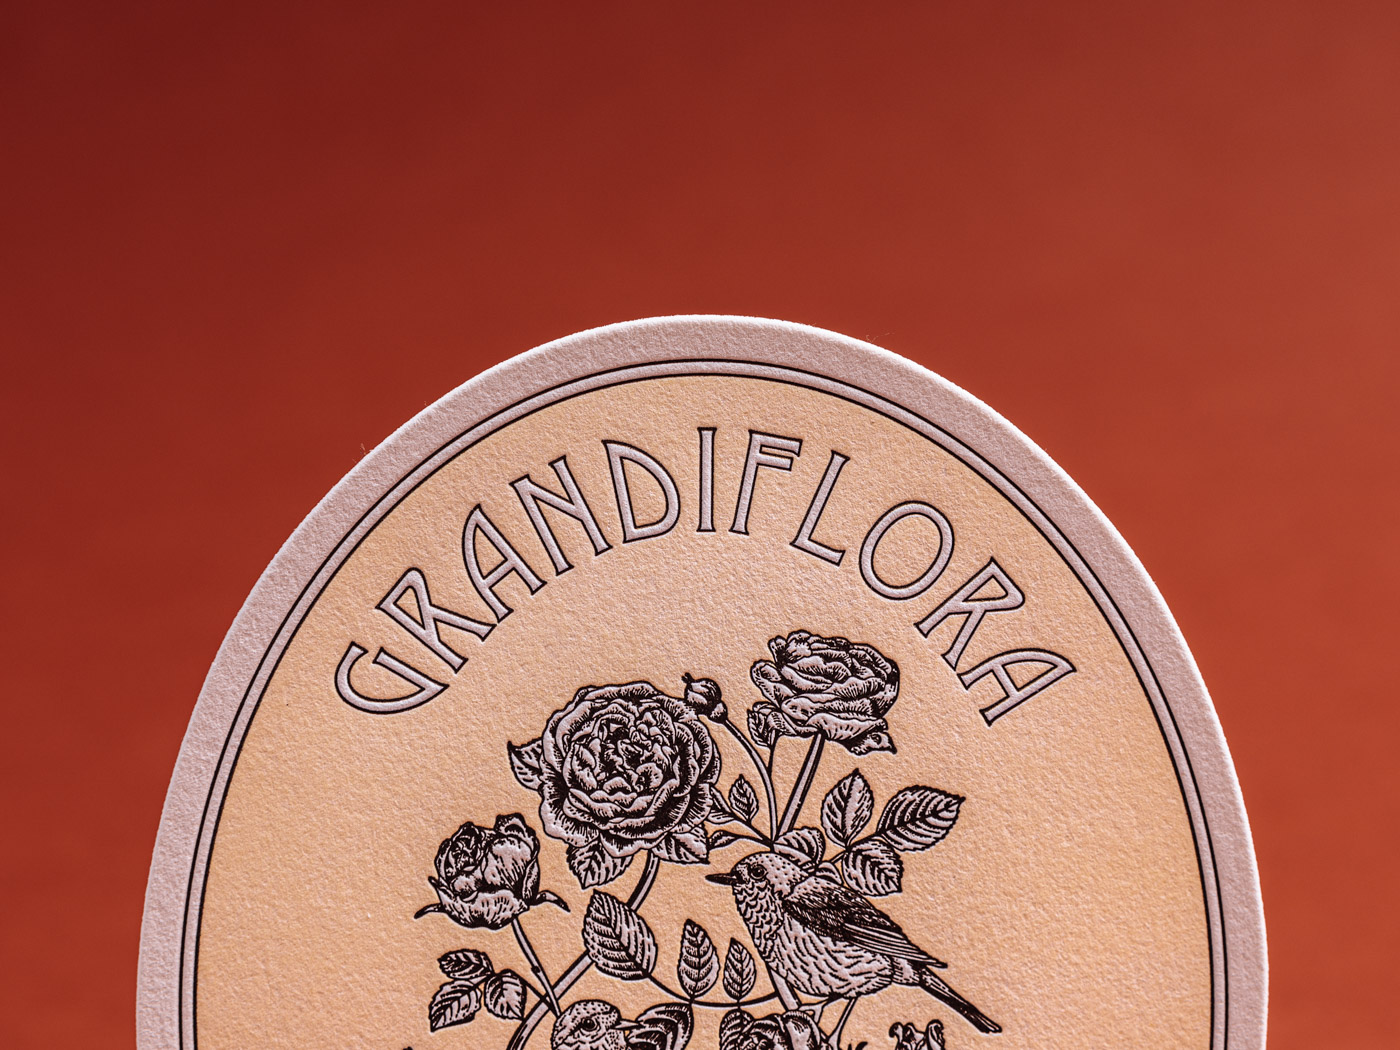 Grandiflora | Printed by Parklife Press